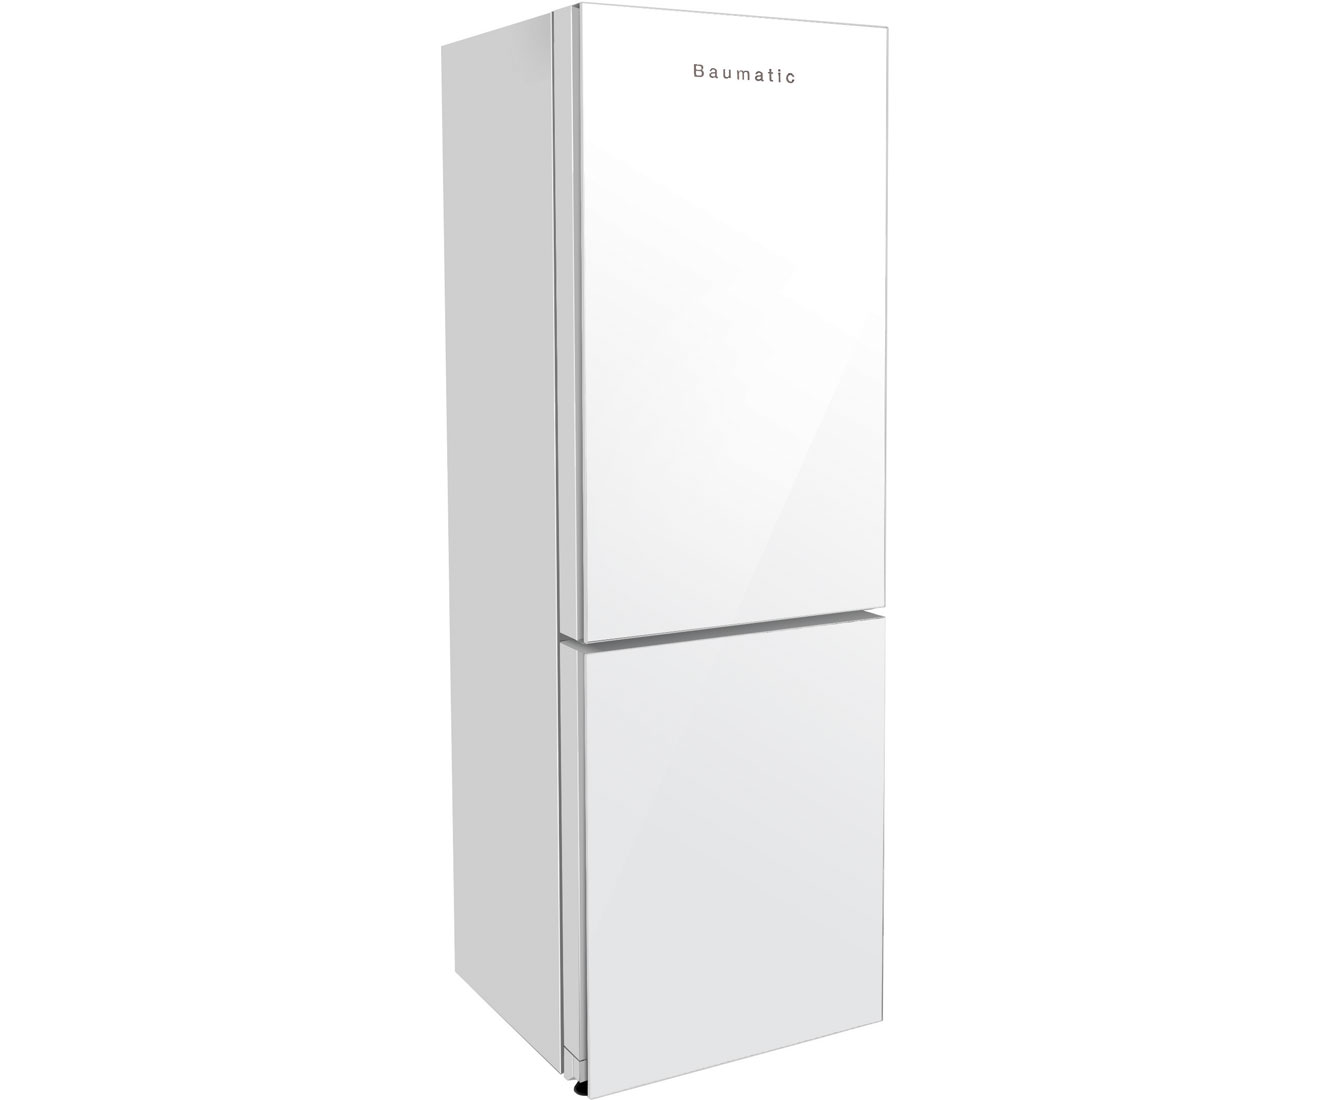 Baumatic BRCF1860WGL Free Standing Fridge Freezer in White